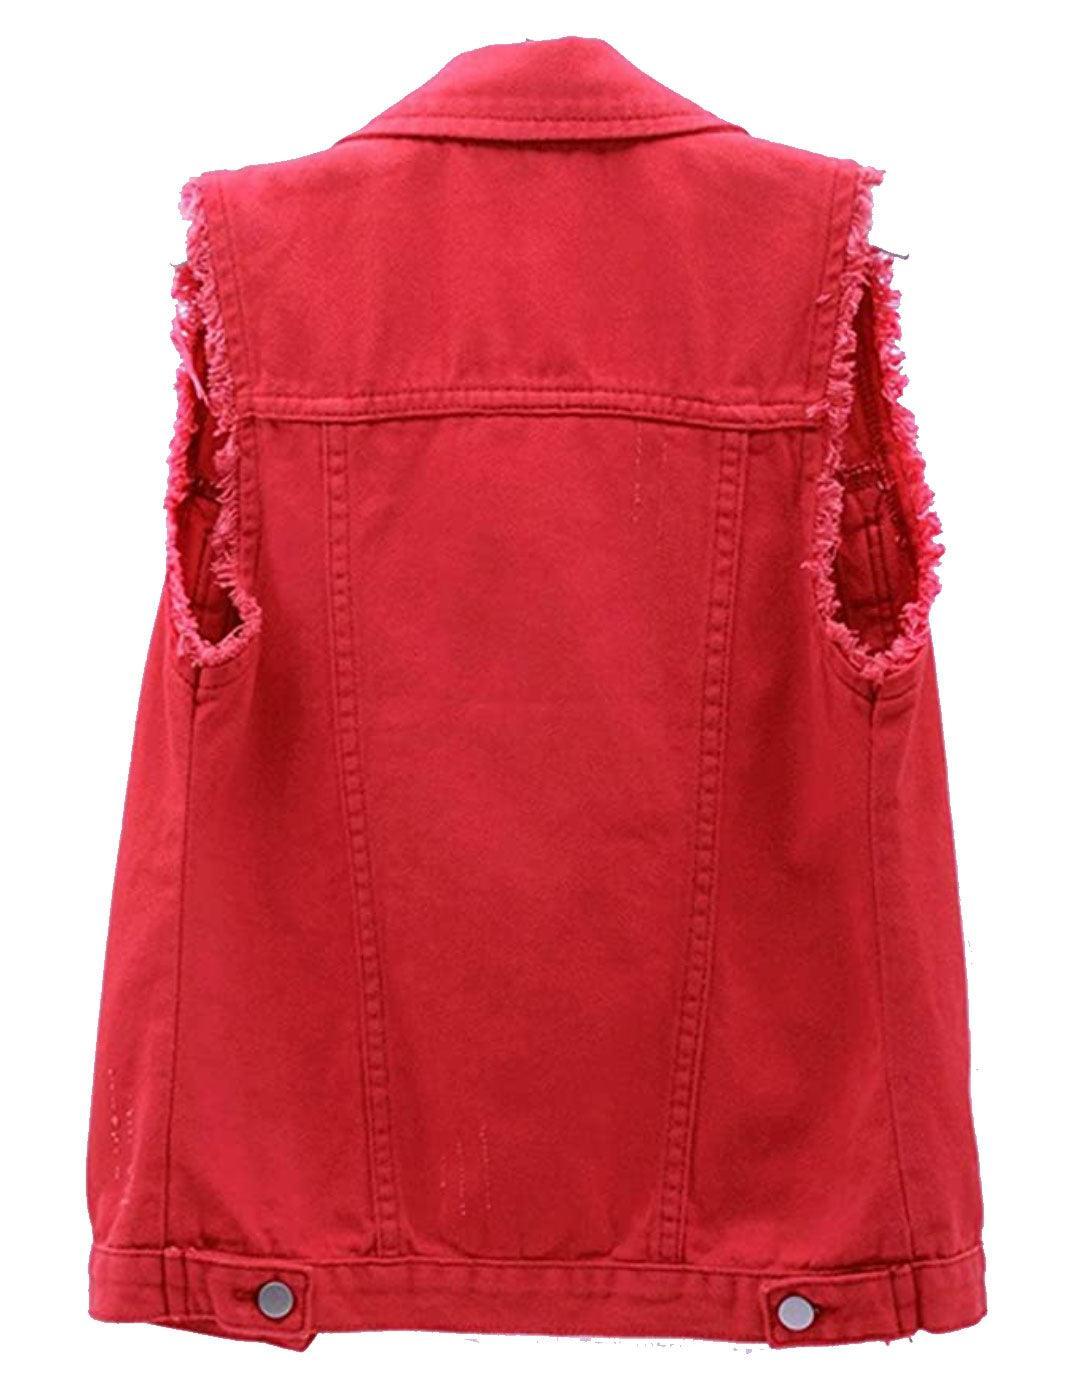 Distressed Sleeveless Denim Jacket Vest (Women's) - Constantly Create Shop